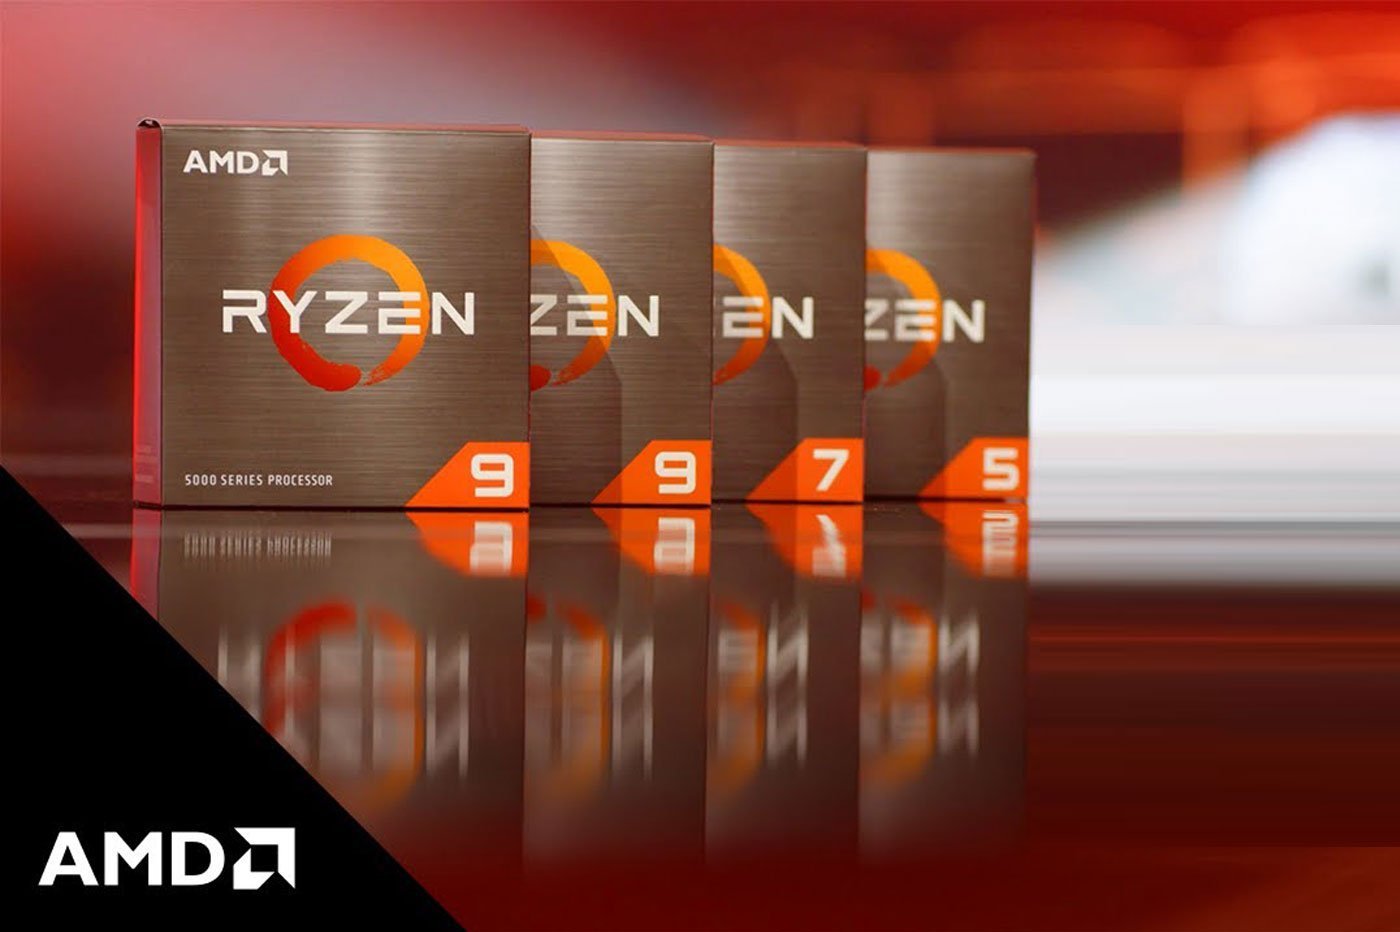 AMD Ryzen 5 3600 3,6GHz Socket AM4 Box au meilleur prix - Comparez